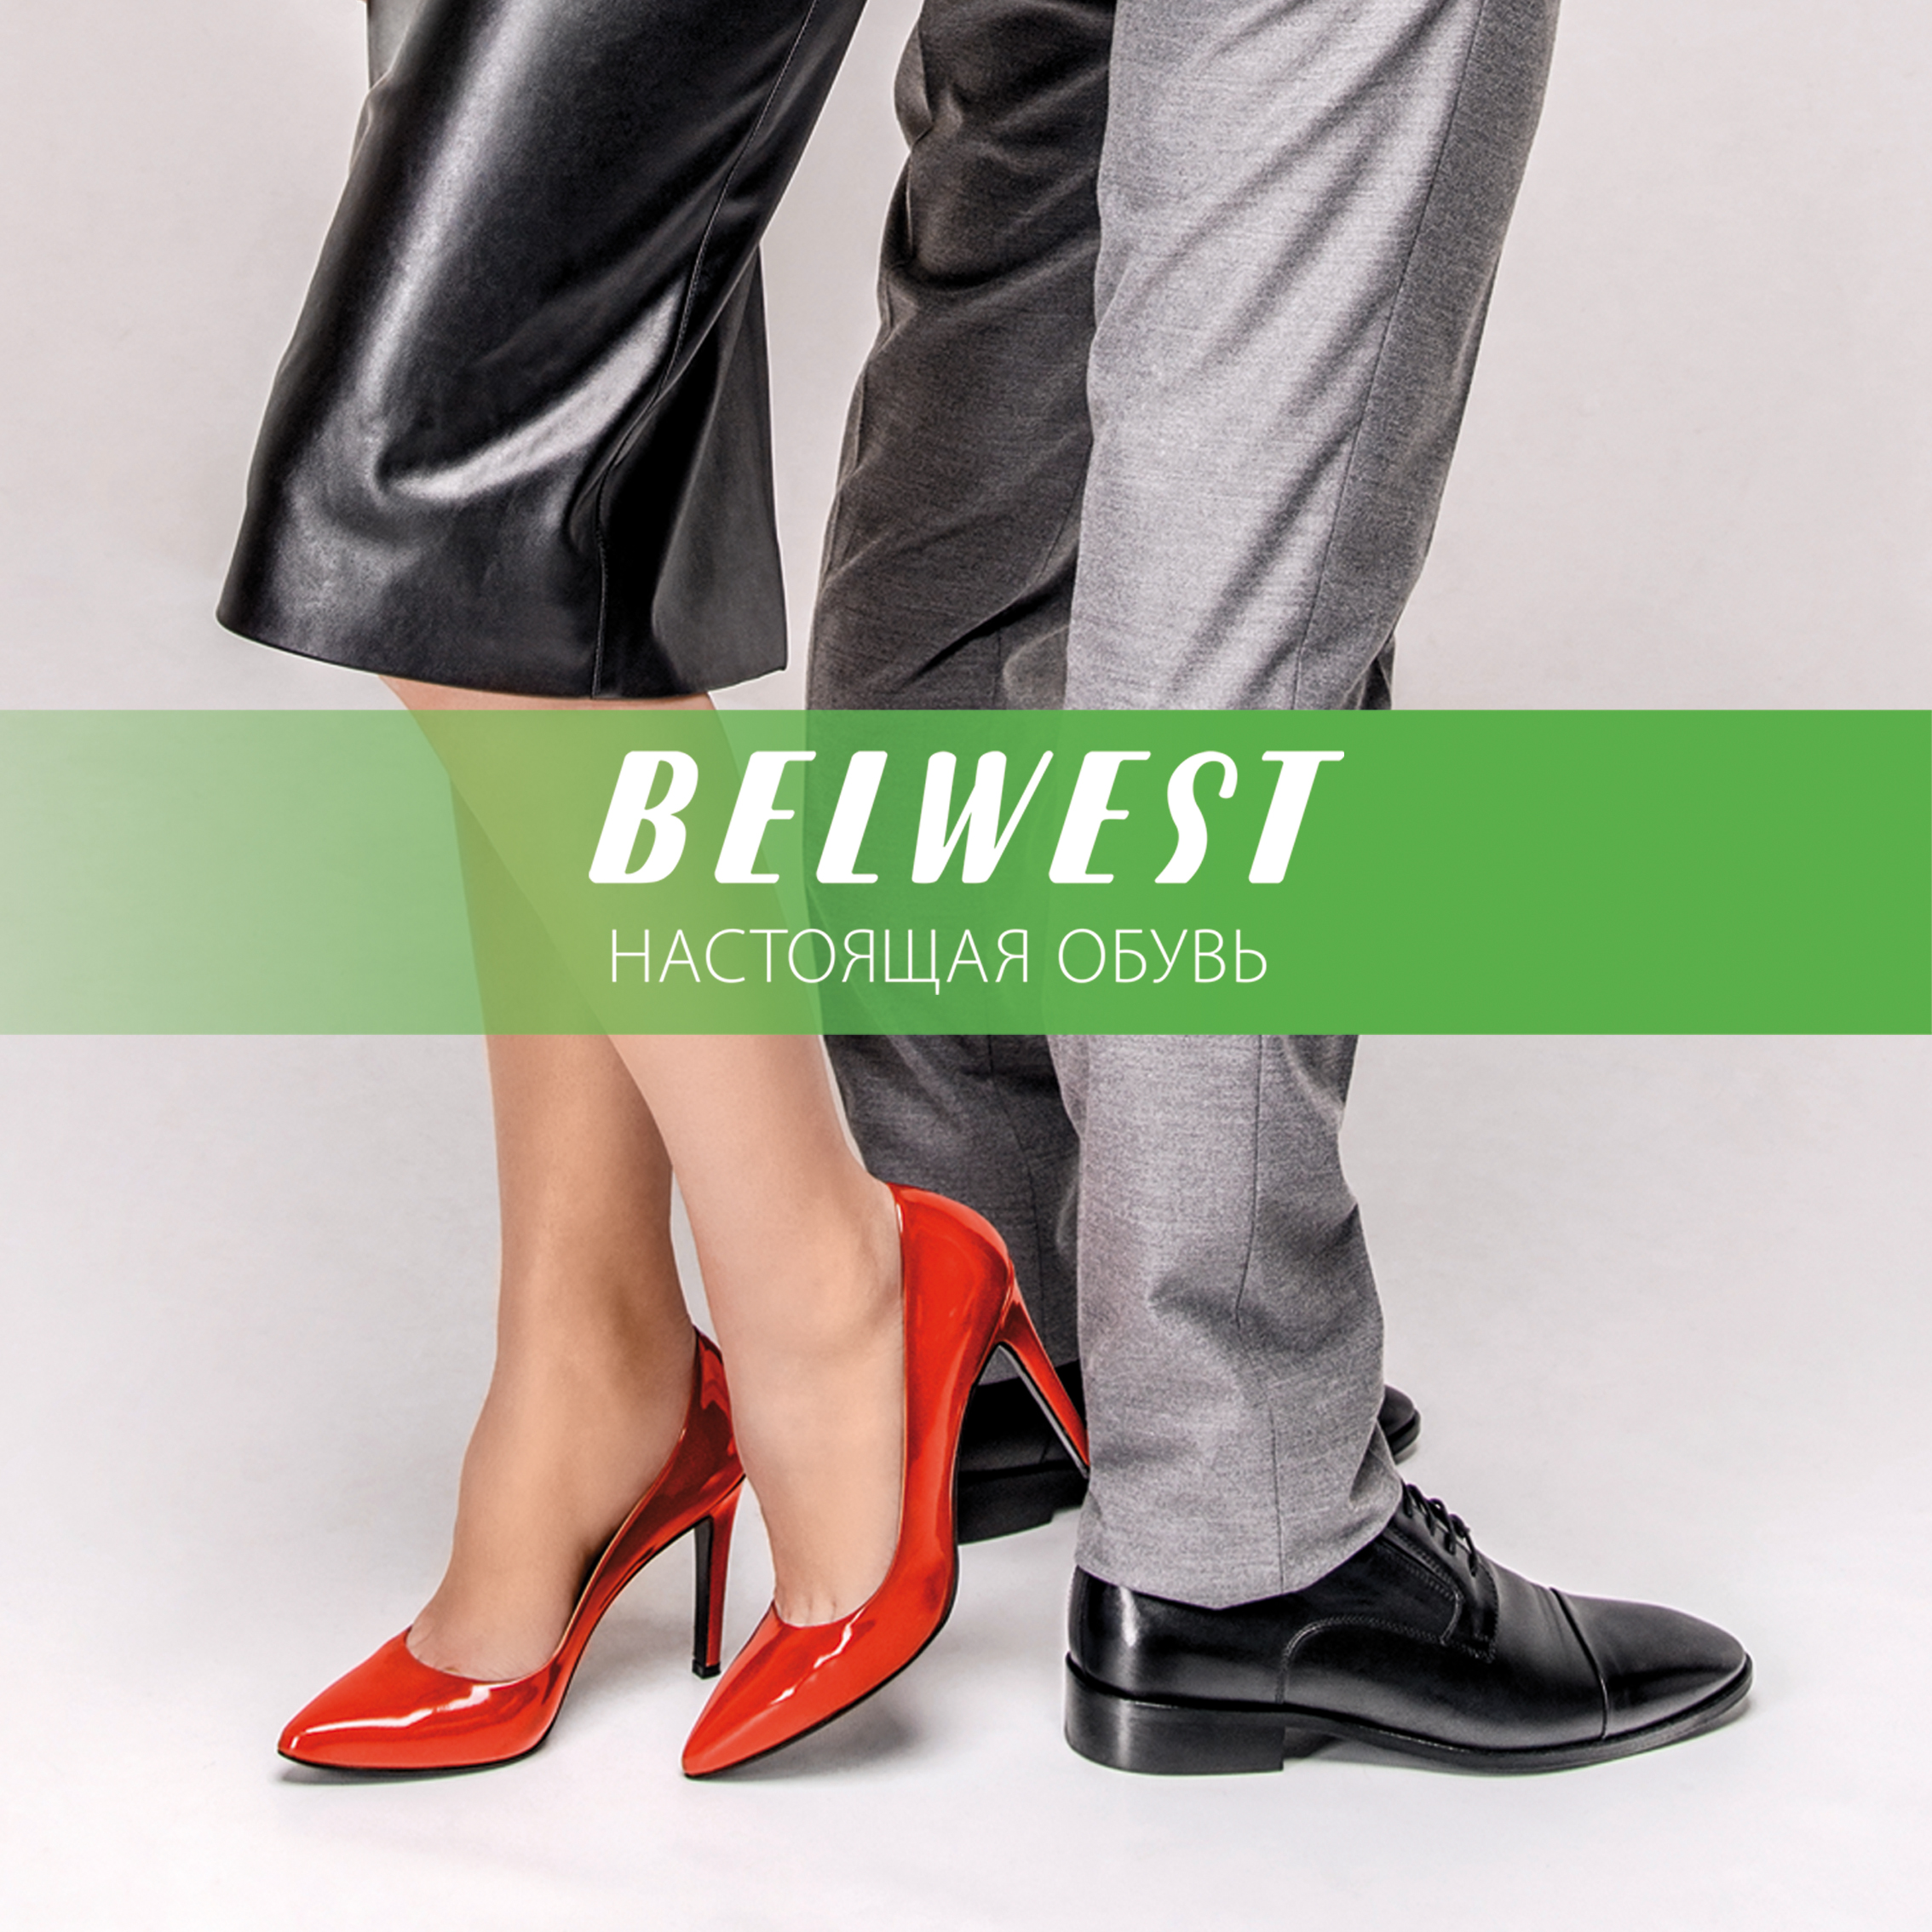 Сайт belwest обувь. Белорусская обувь белвест. 1933021/1 Белвест. Белвест логотип. Белвест реклама.